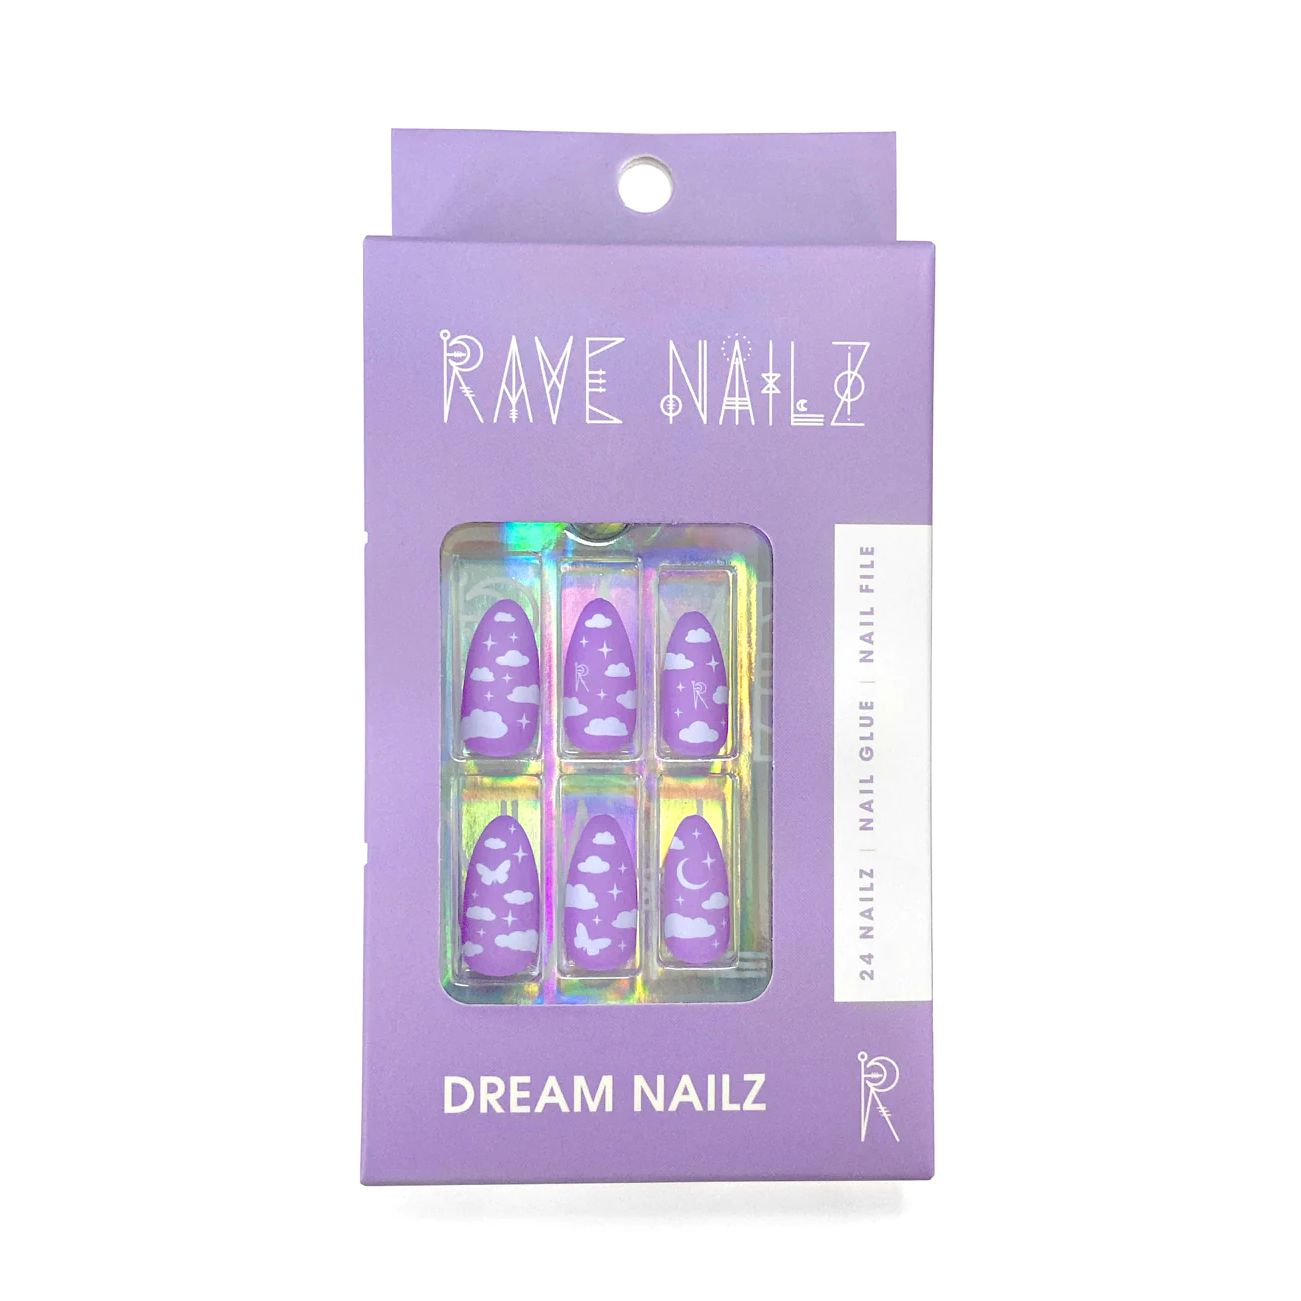 Dream Nailz | Press On Nail Kit Includes 24 Nails